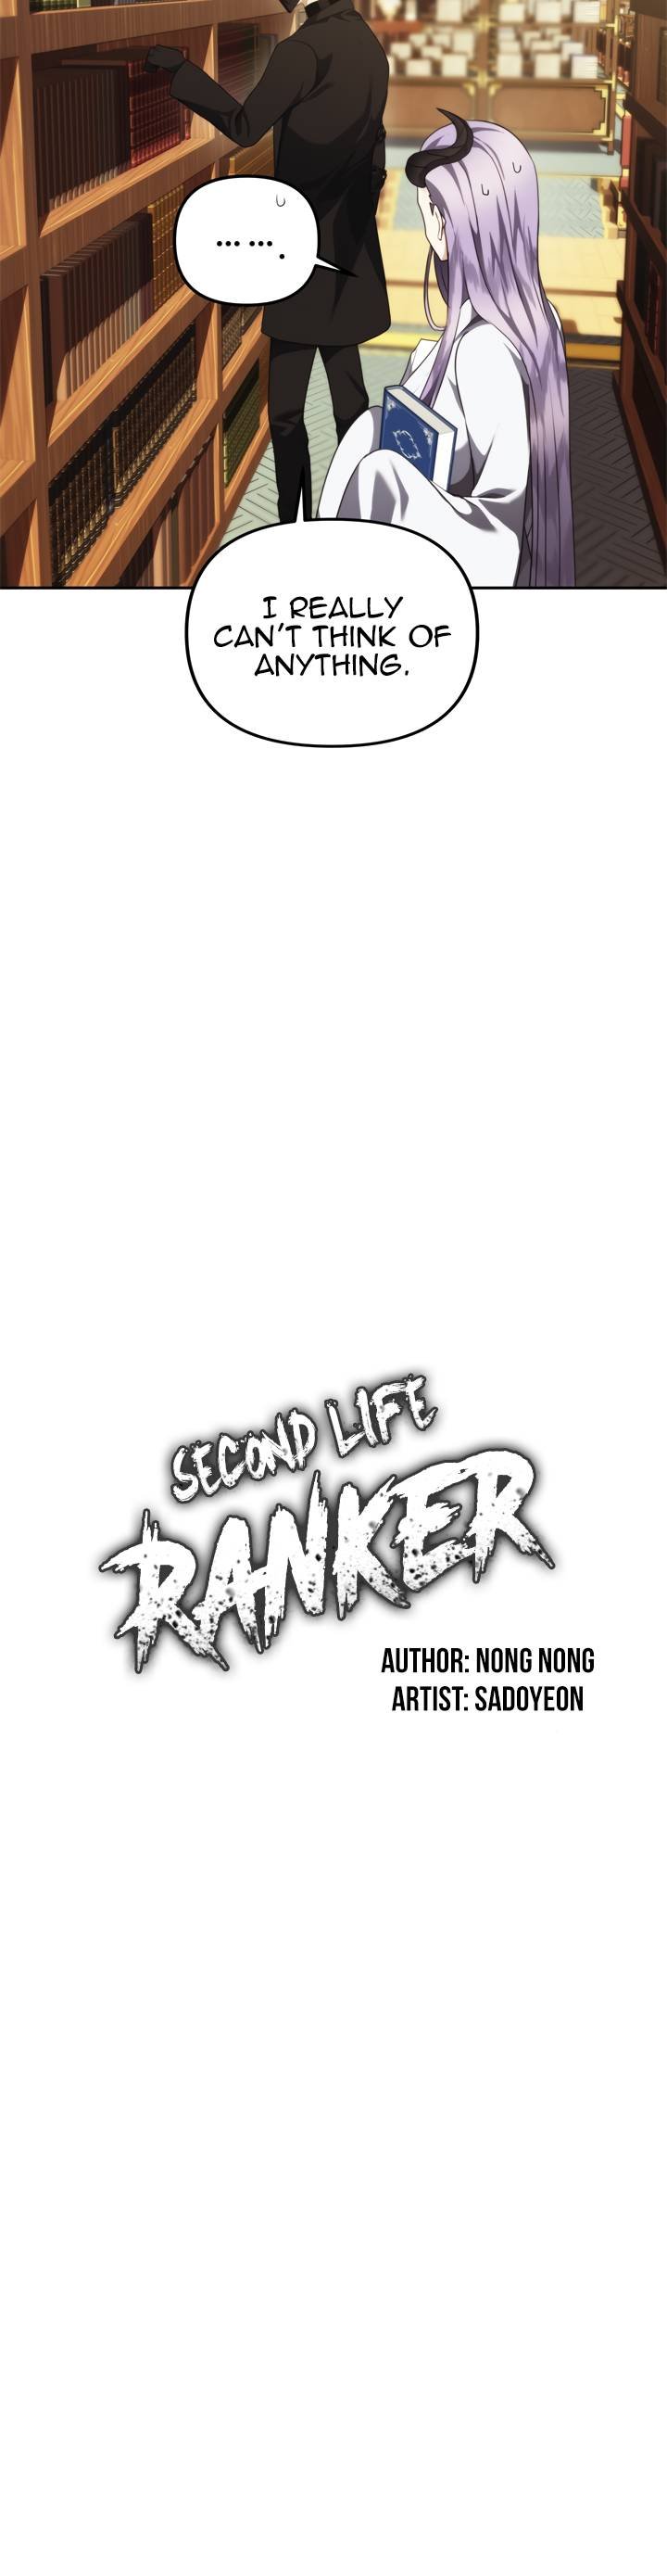 Second Life Ranker 93 4